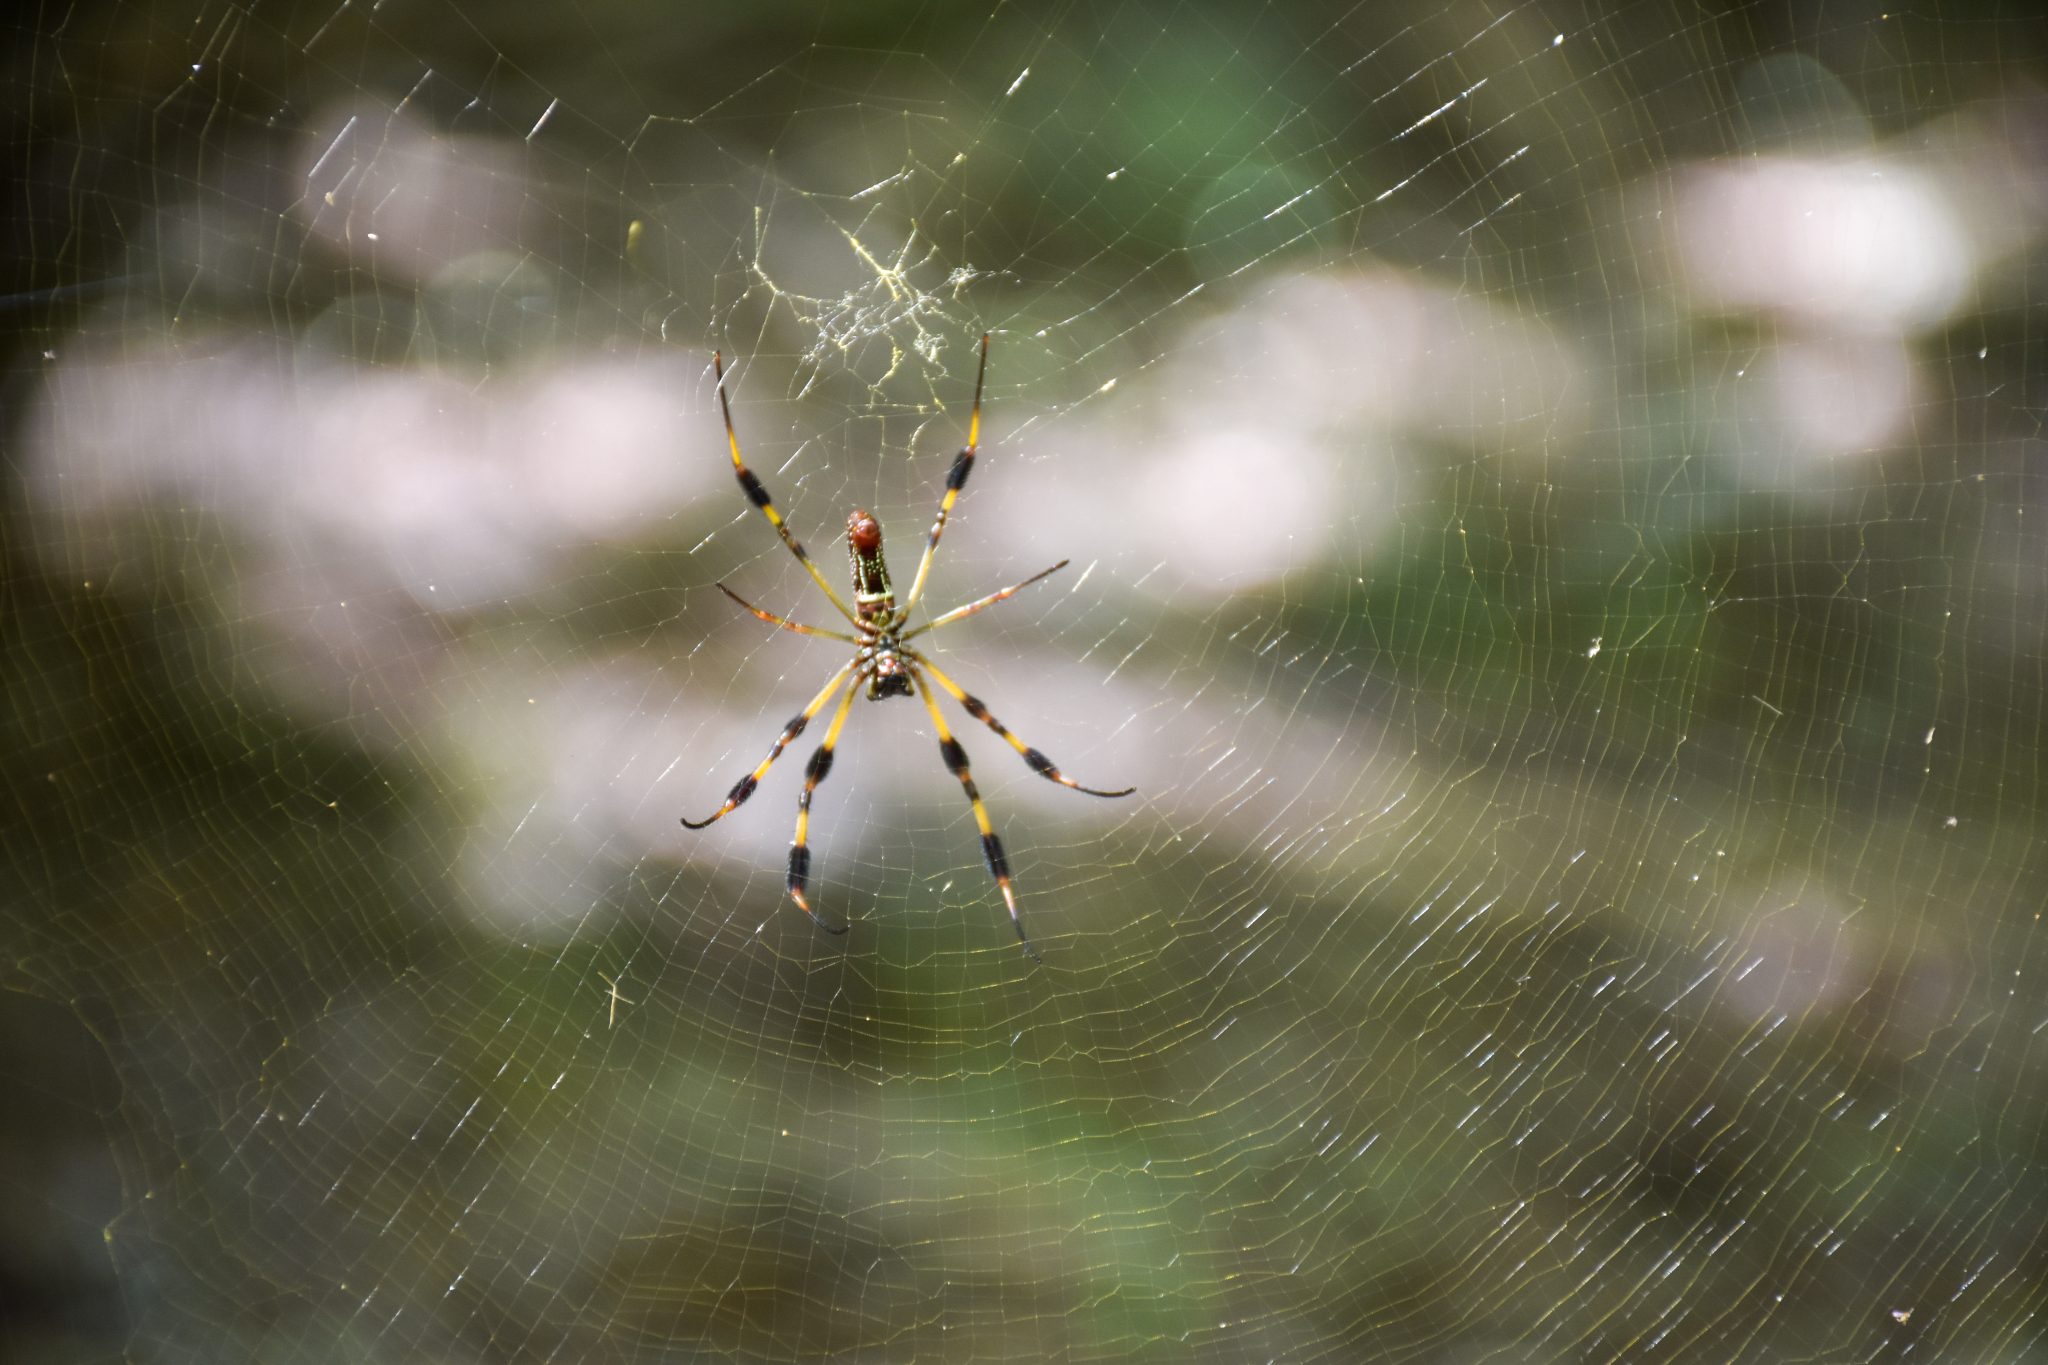 Banana spider on its web